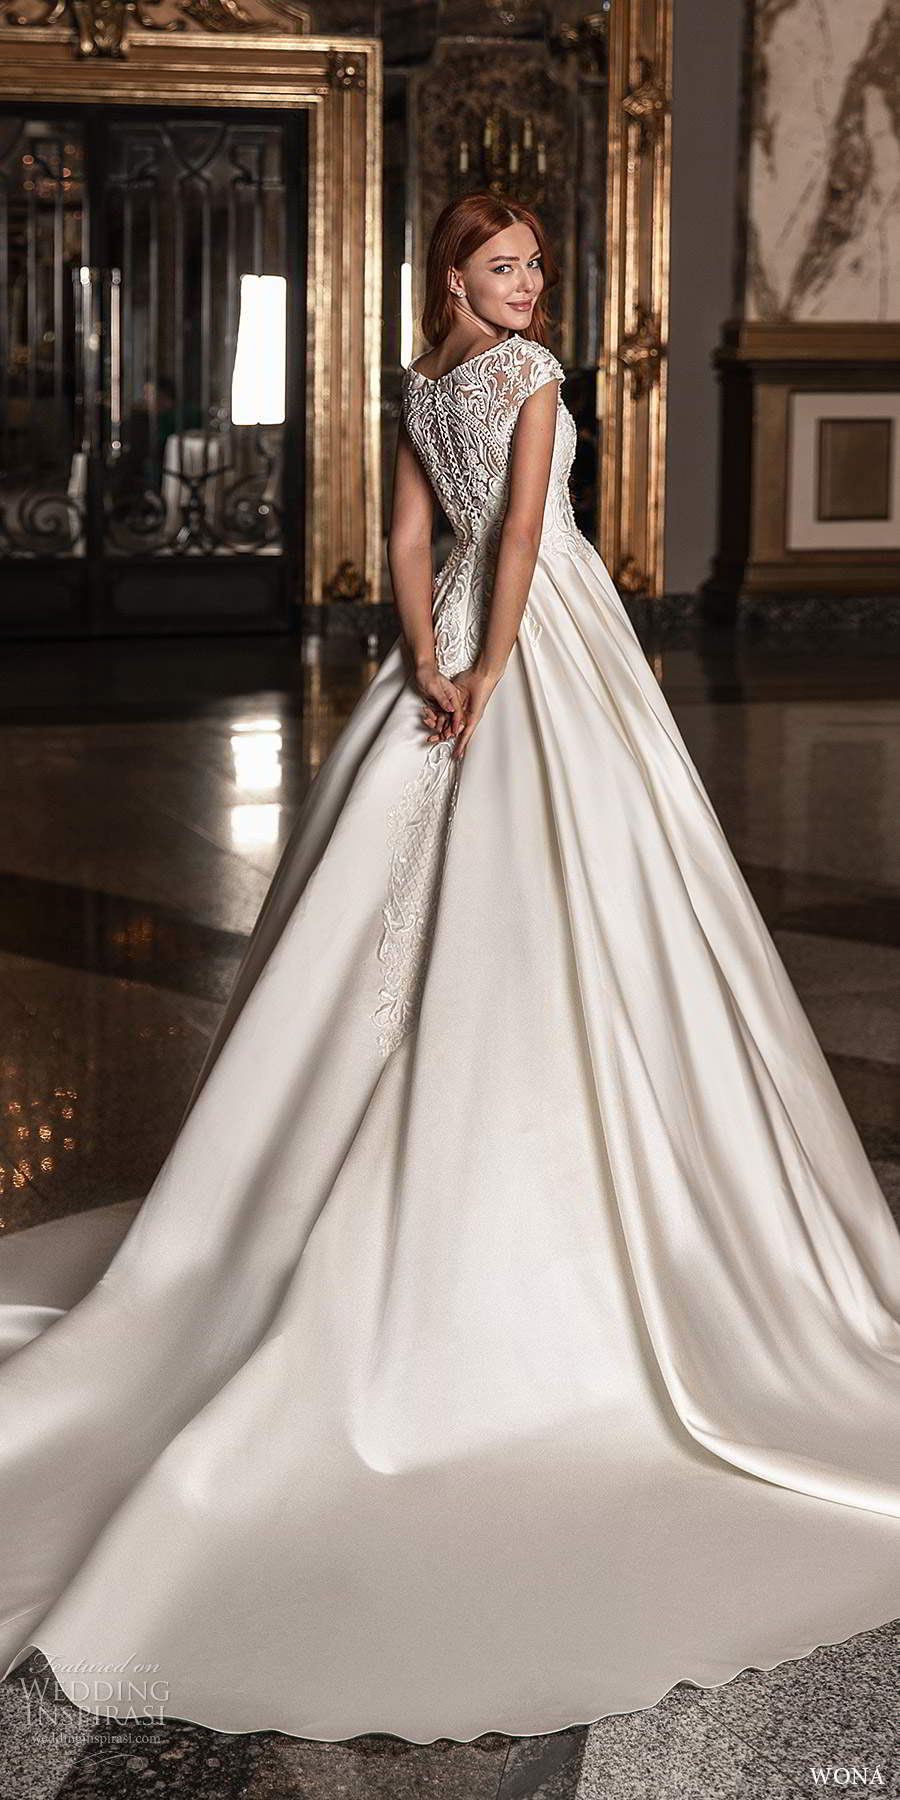 wona 2020 edem bridal illusion cap sleeves high neckline embellished bodice clean skirt a line ball gown wedding dress chapel train (3) bv